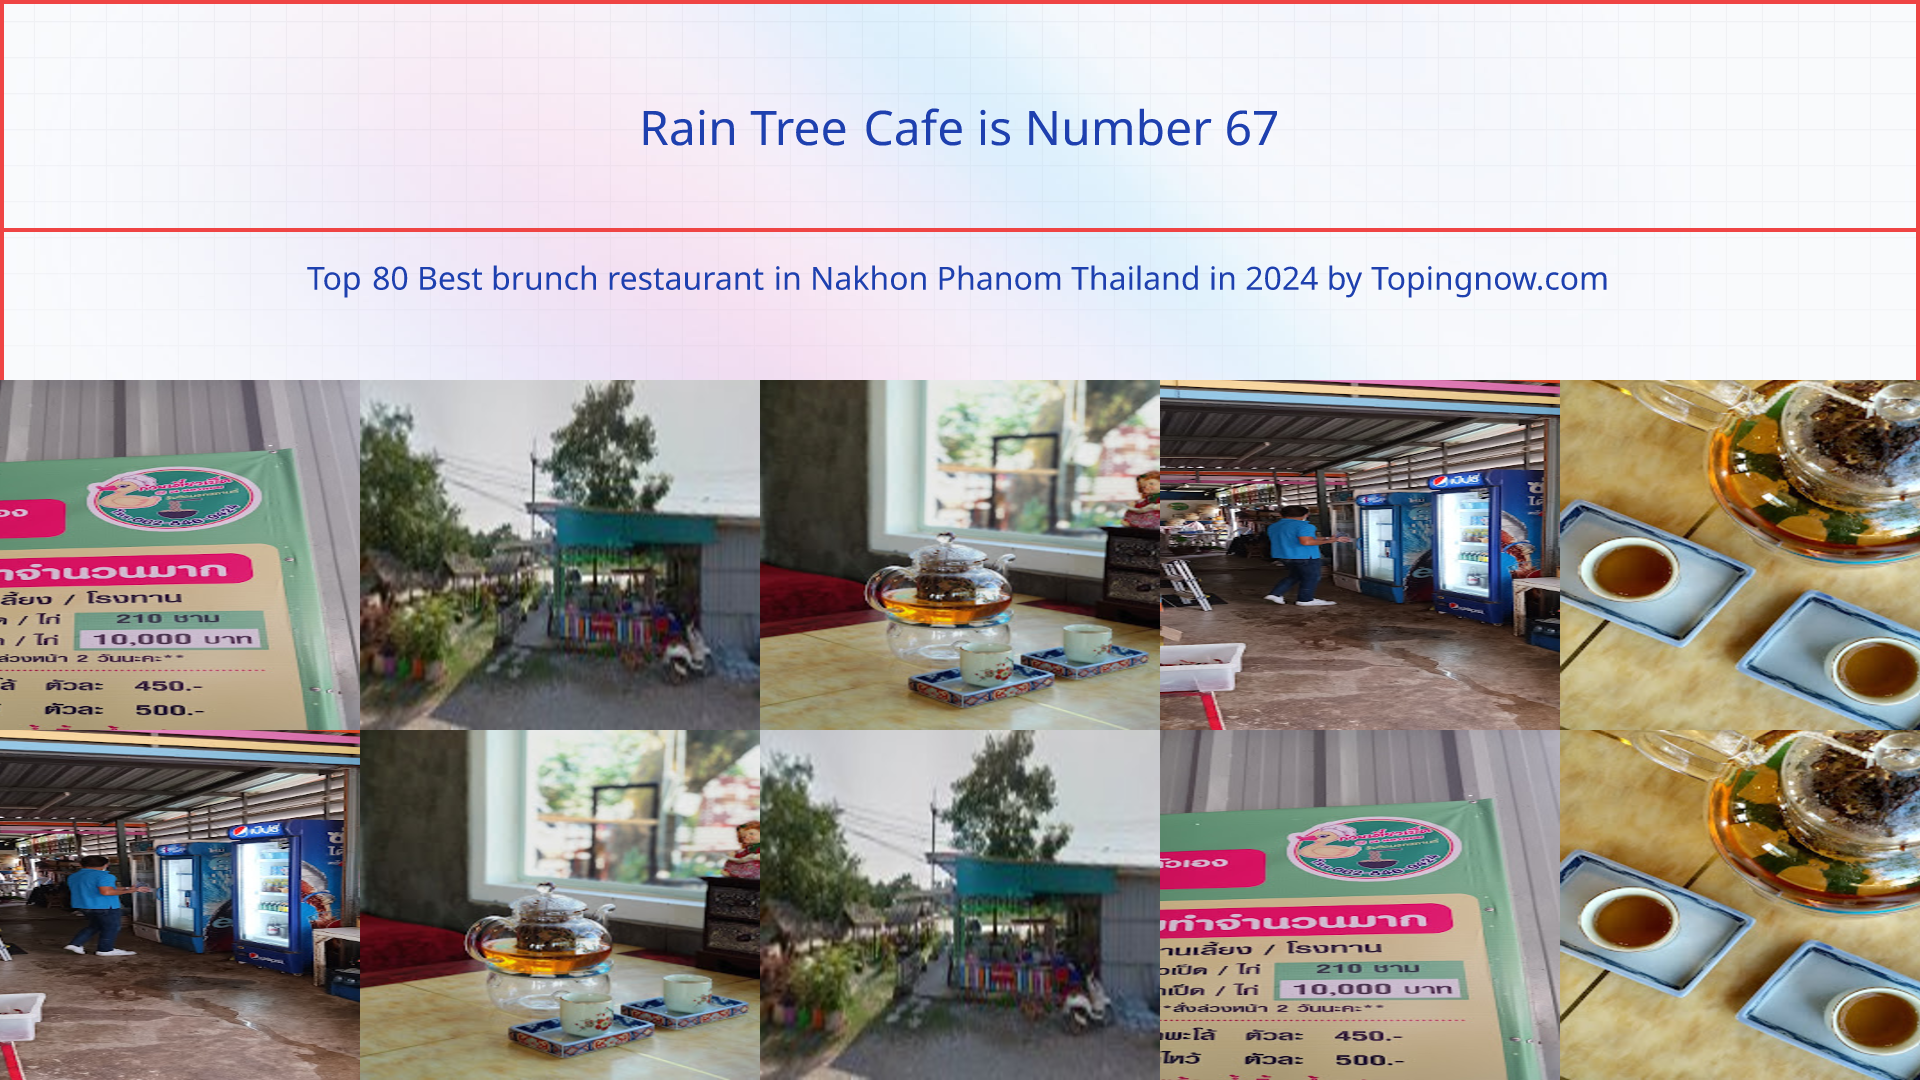 Rain Tree Cafe: Top 80 Best brunch restaurant in Nakhon Phanom Thailand in 2024